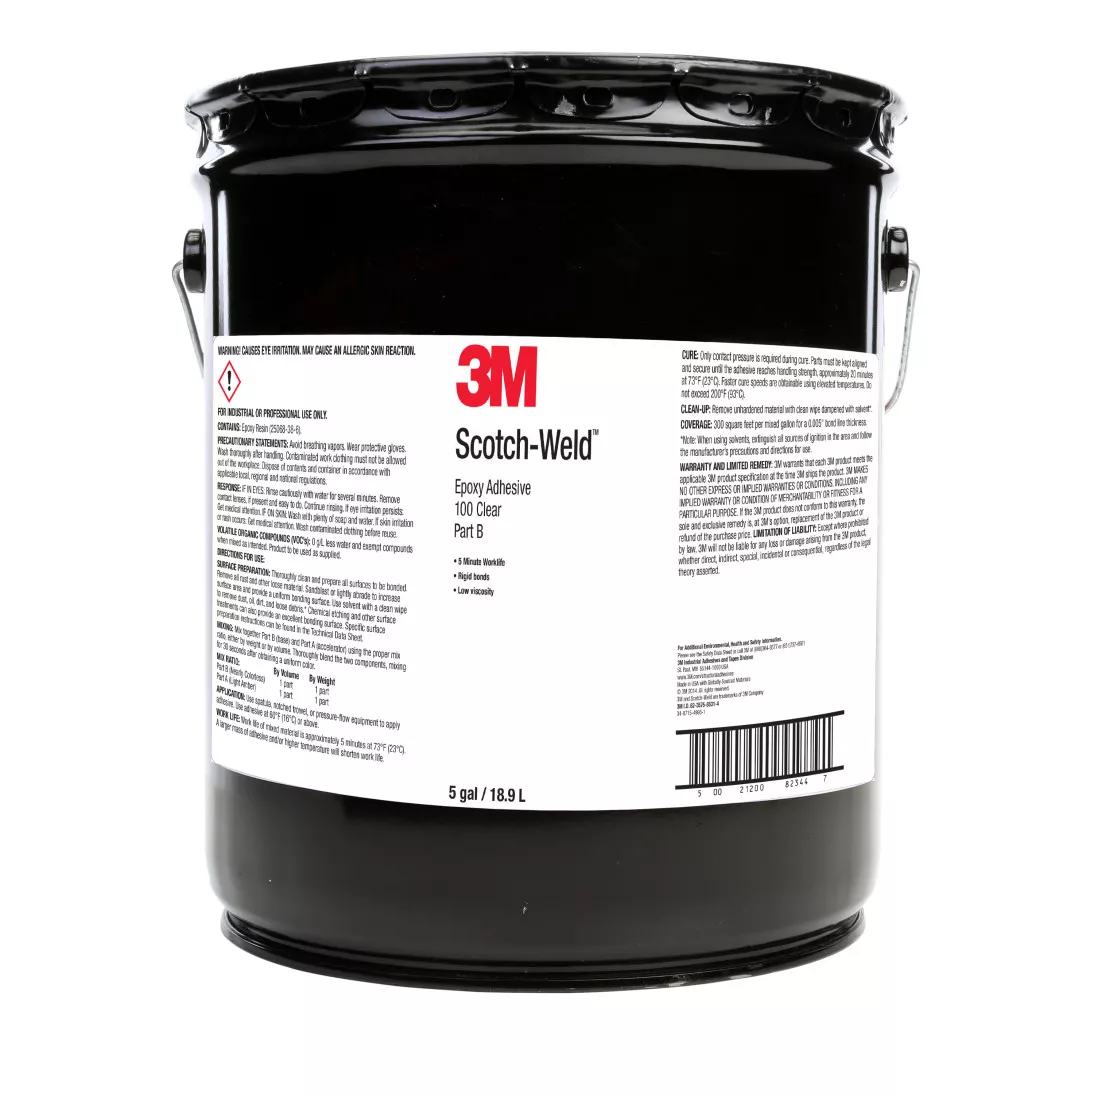 3M™ Scotch-Weld™ Epoxy Adhesive 100, Clear, Part B, 5 Gallon Drum (Pail)